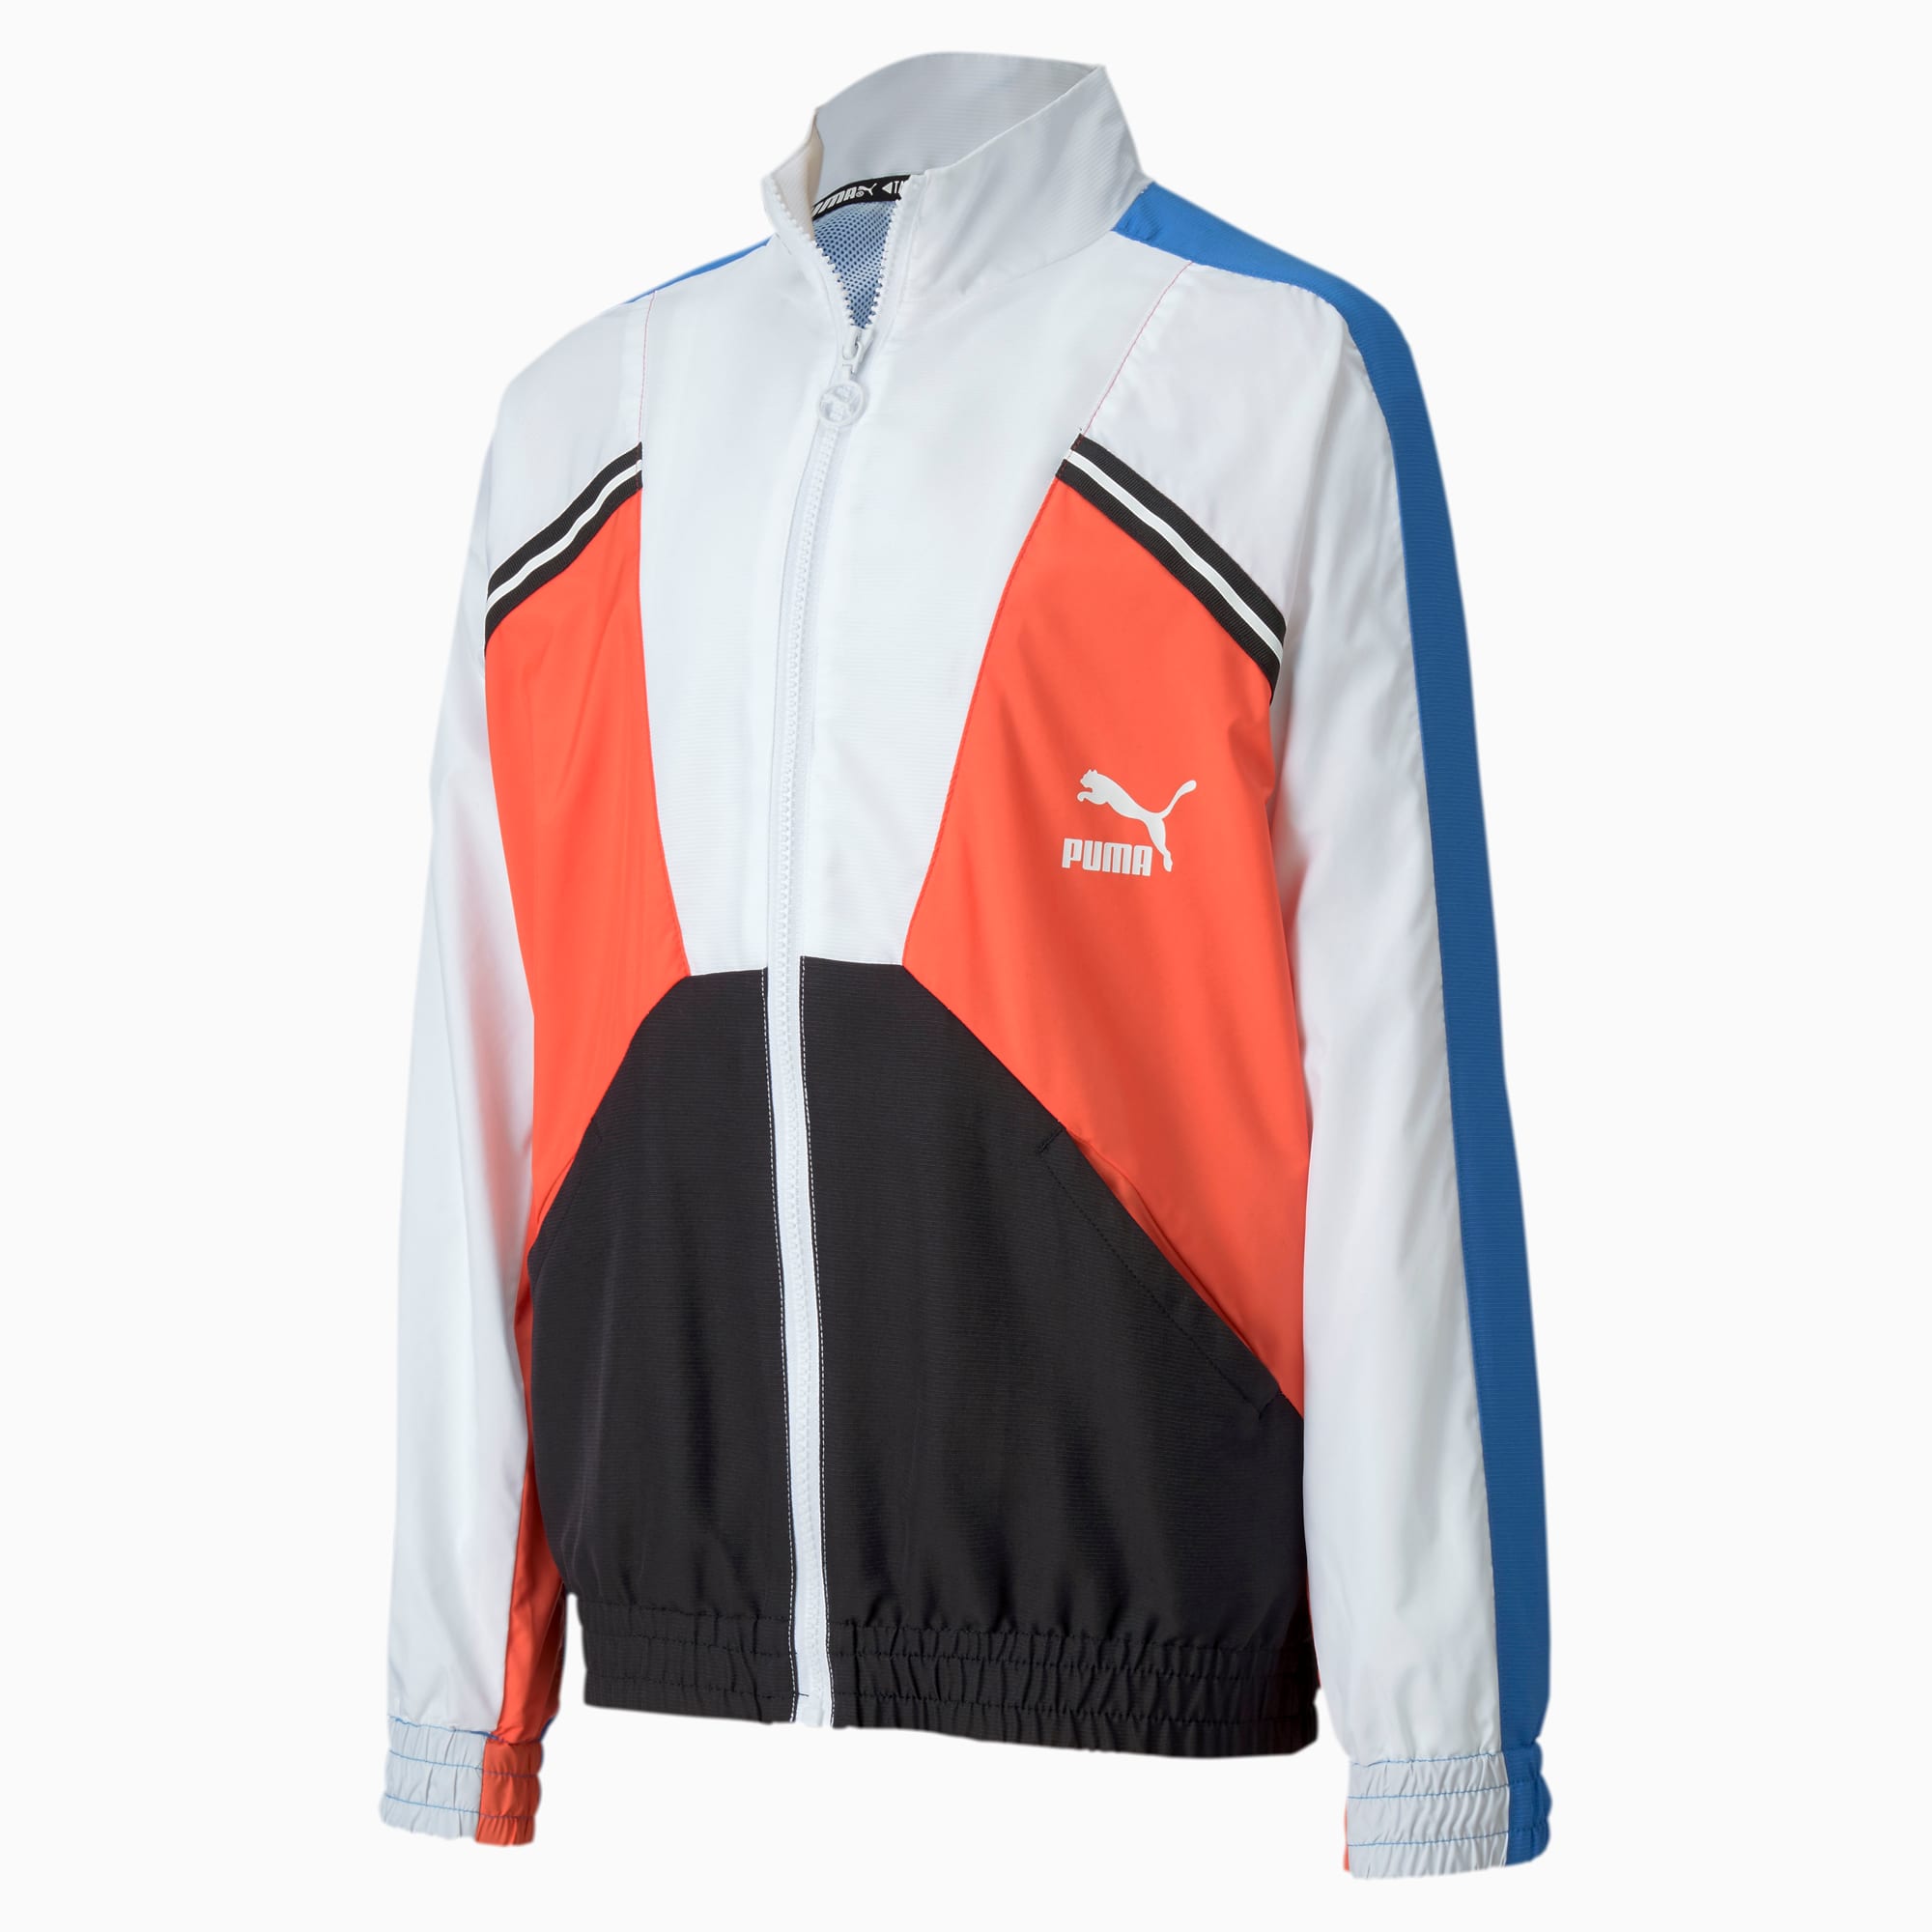 puma sportswear jacket